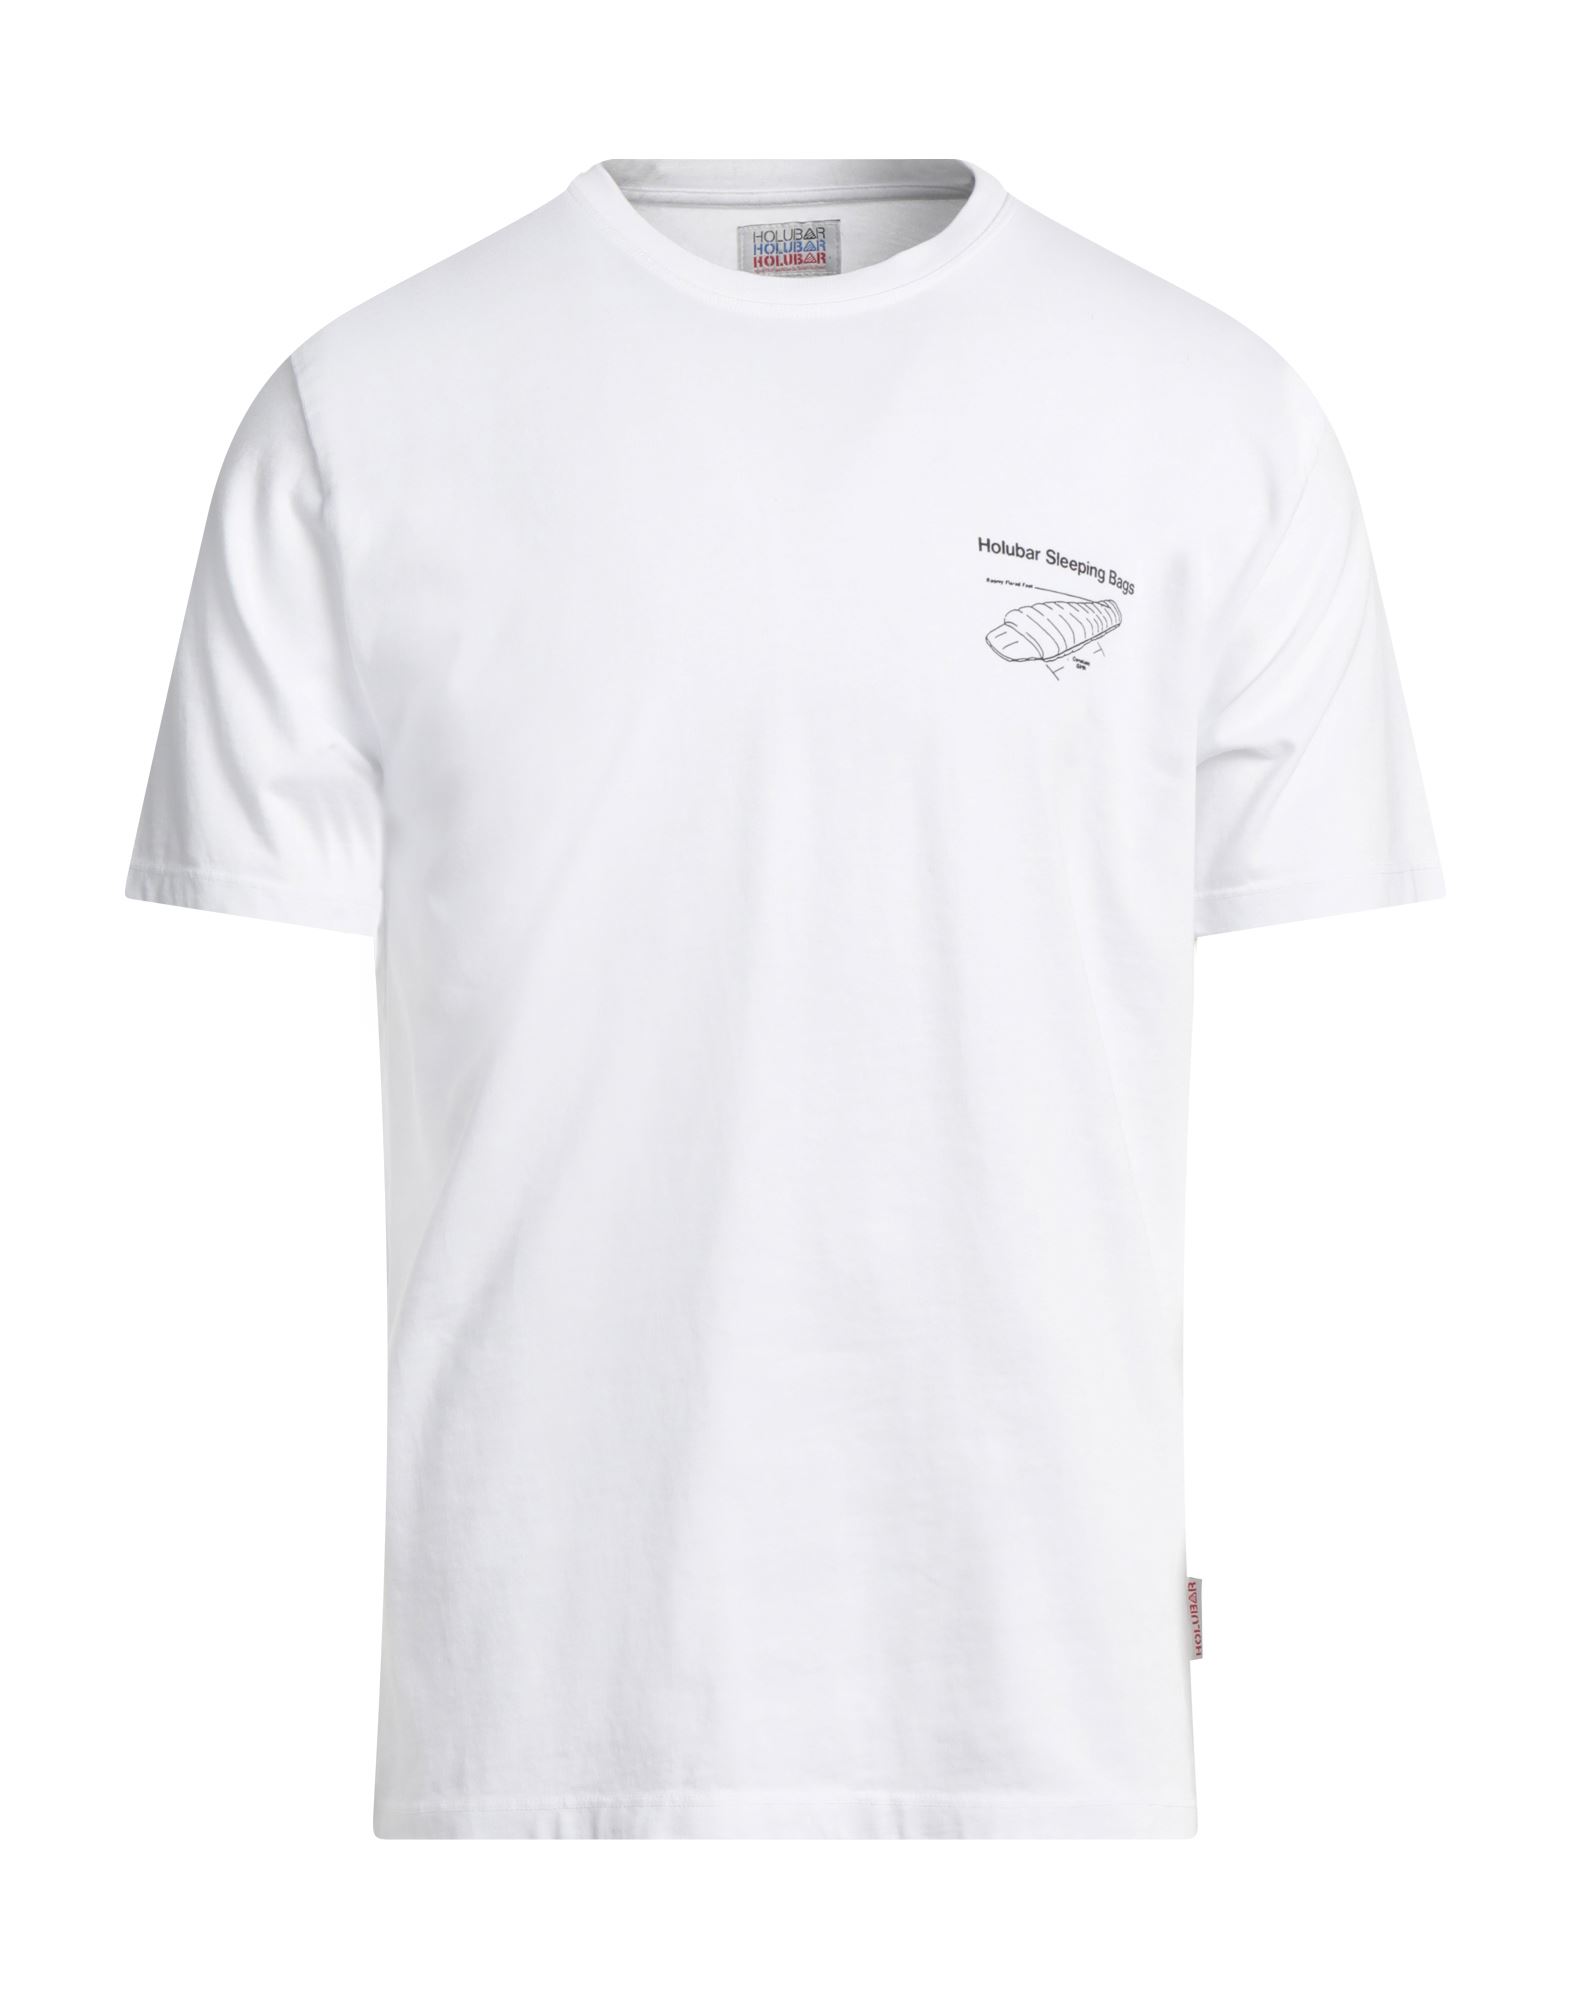 Holubar T-shirts In White